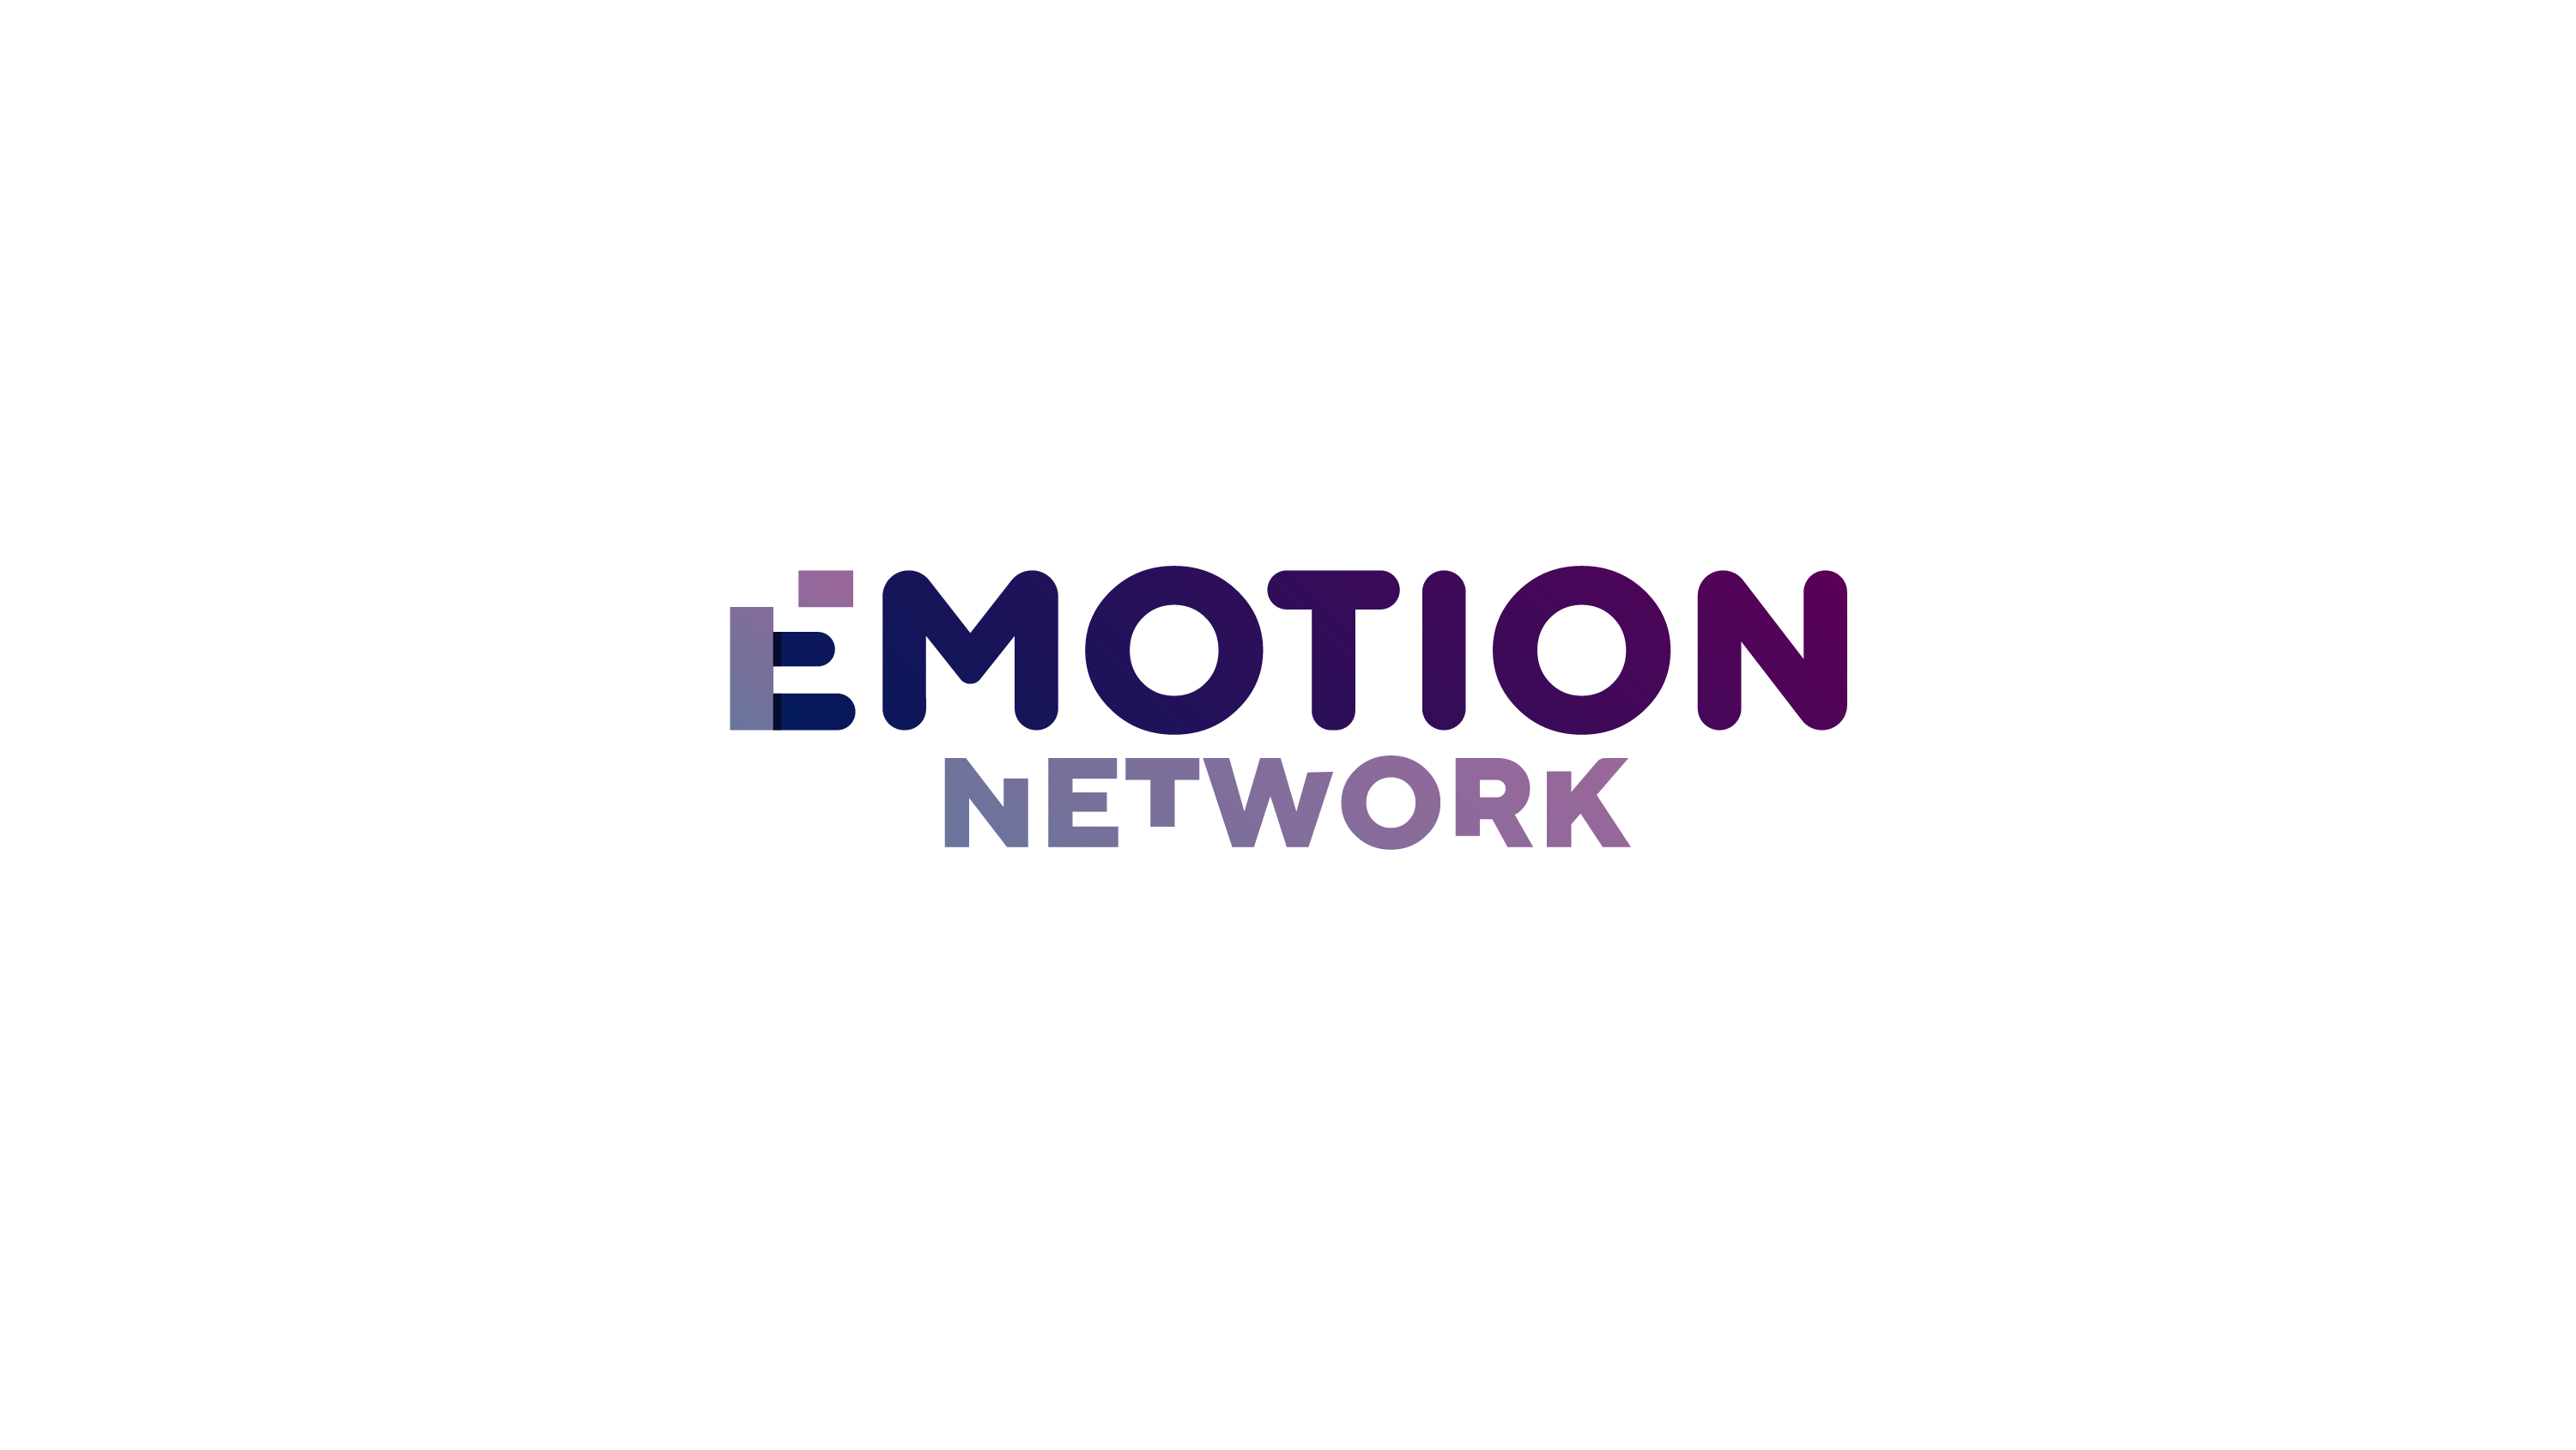 EMOTION NETWORK